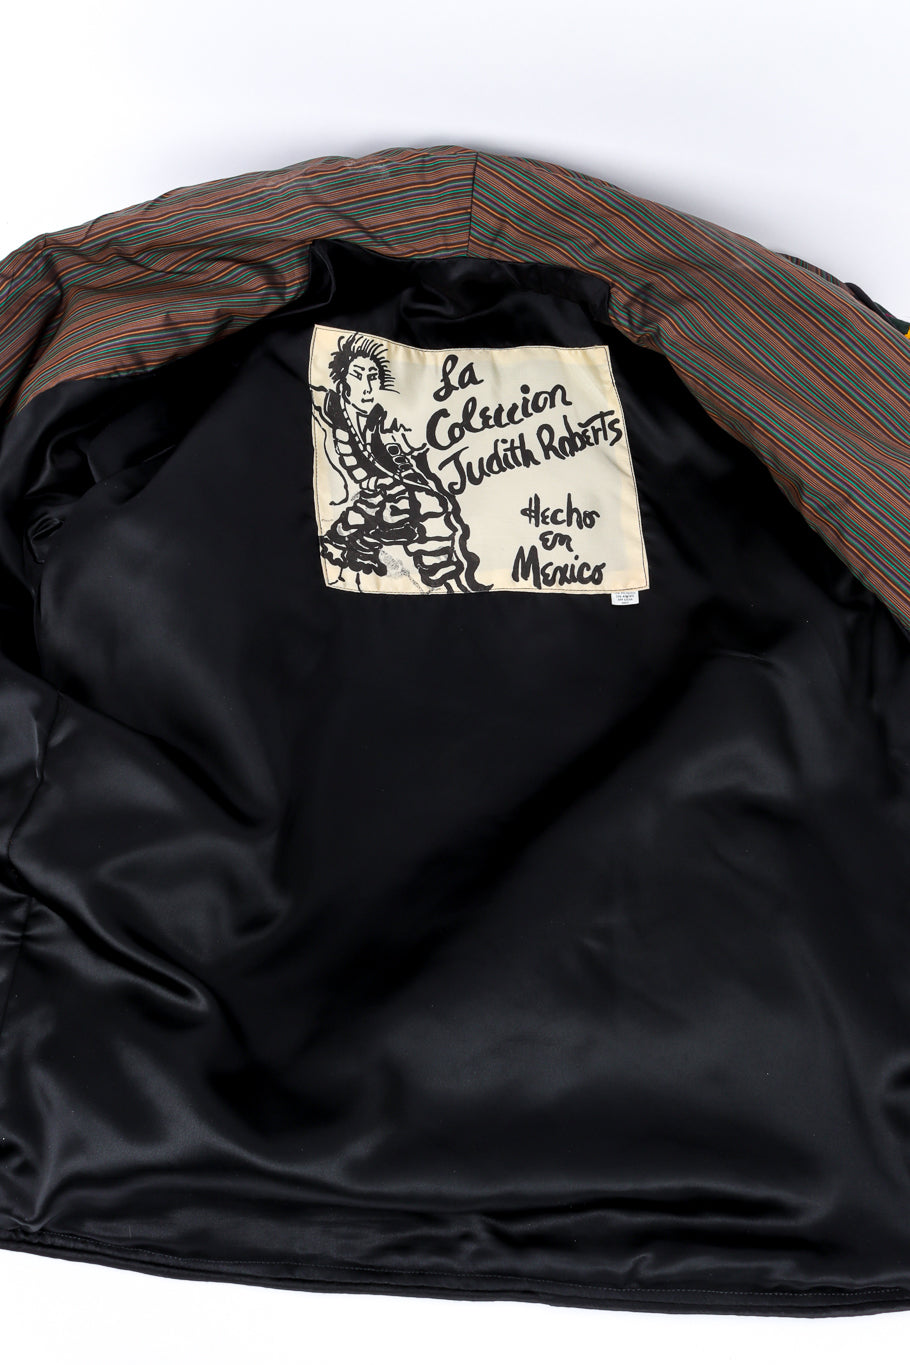 Vintage Judith Roberts Beaded Safari Patchwork Jacket view of lining @recessla